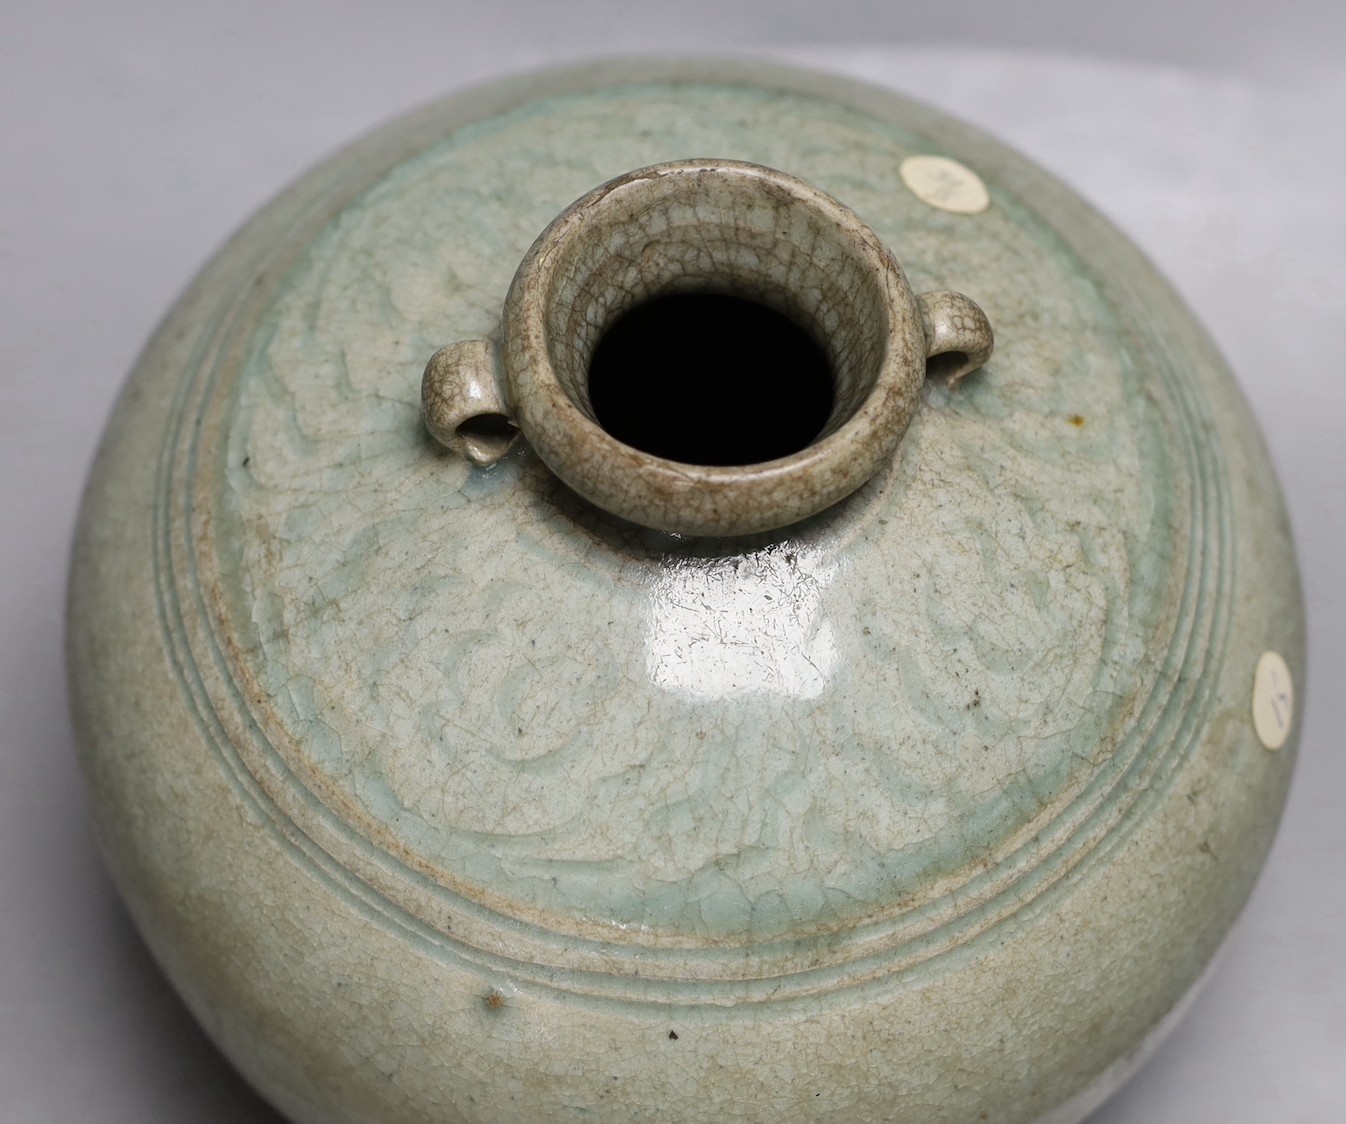 A Thai Sawankhalok green glazed ring handled jar, 15th century